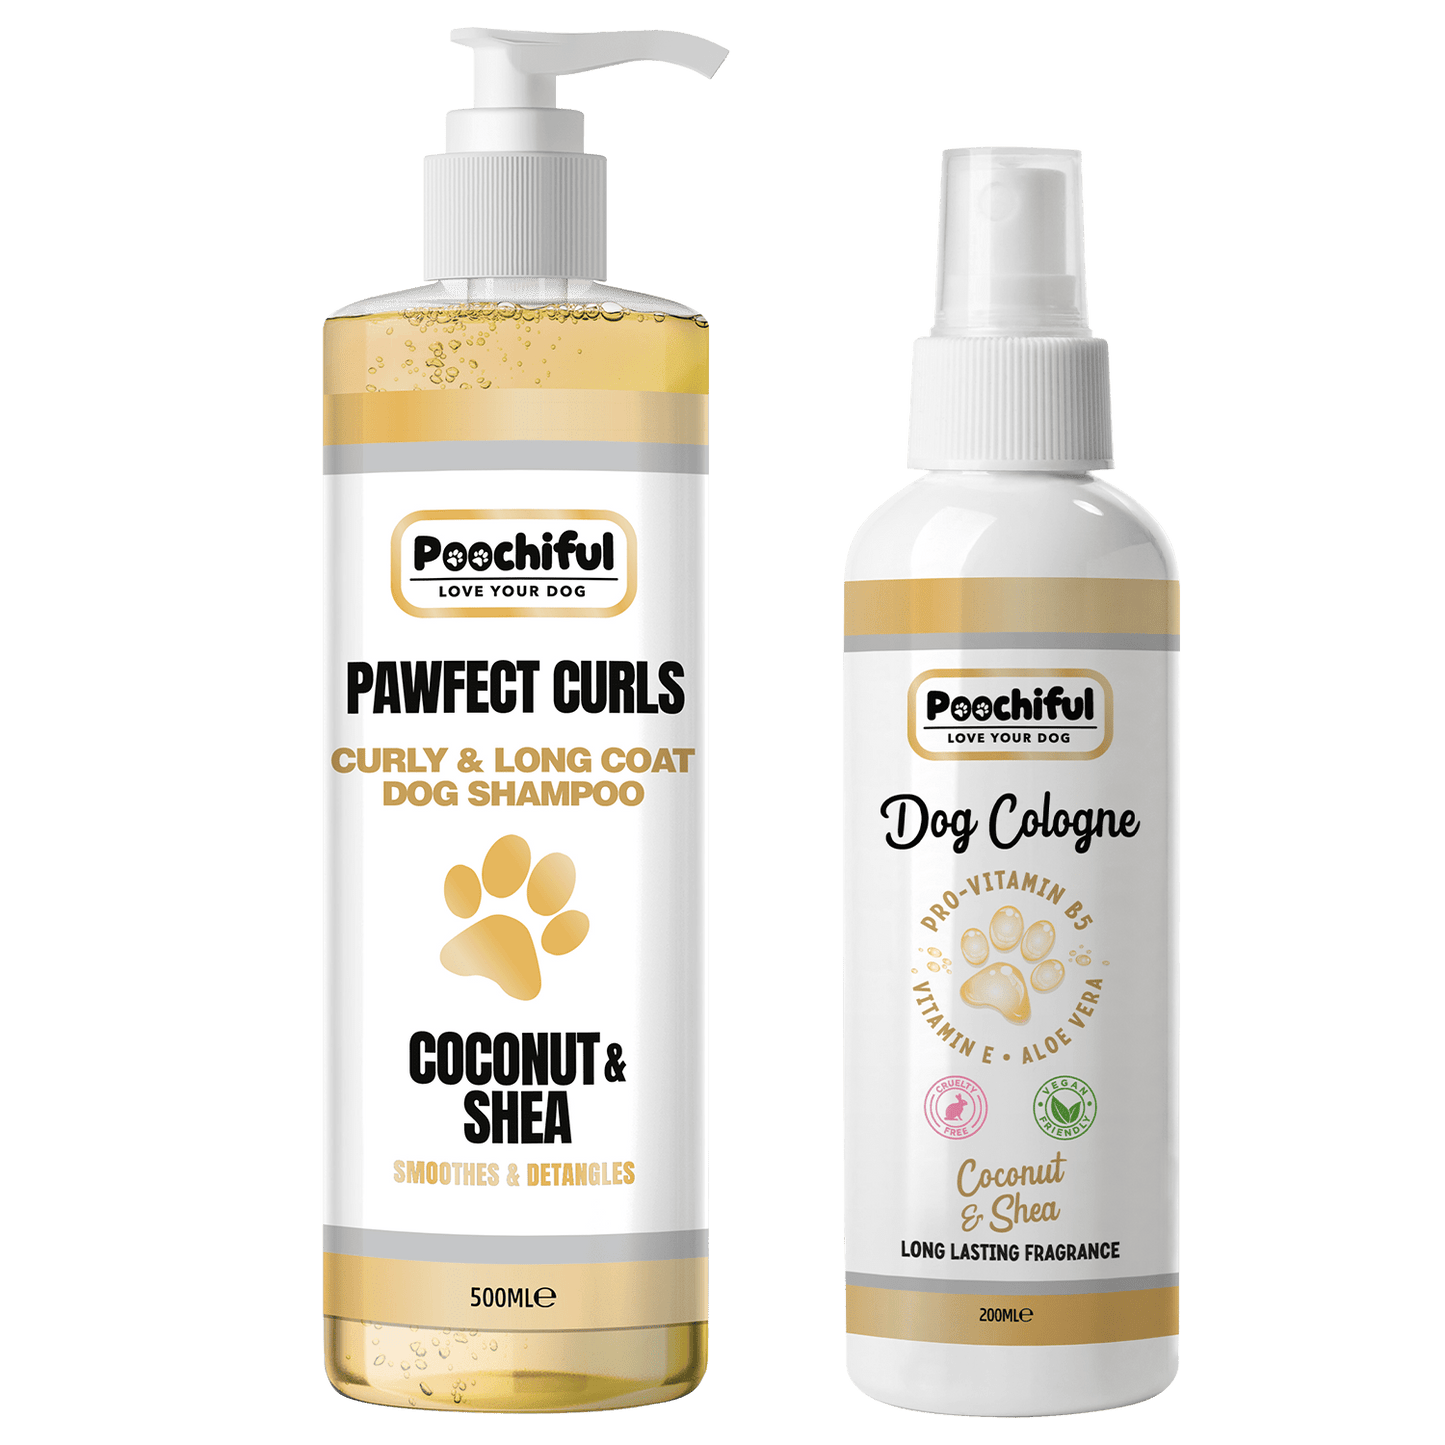 Pawfect Curls Dog Shampoo 500ml + Coconut and Shea 200ml Cologne Spray Bundle